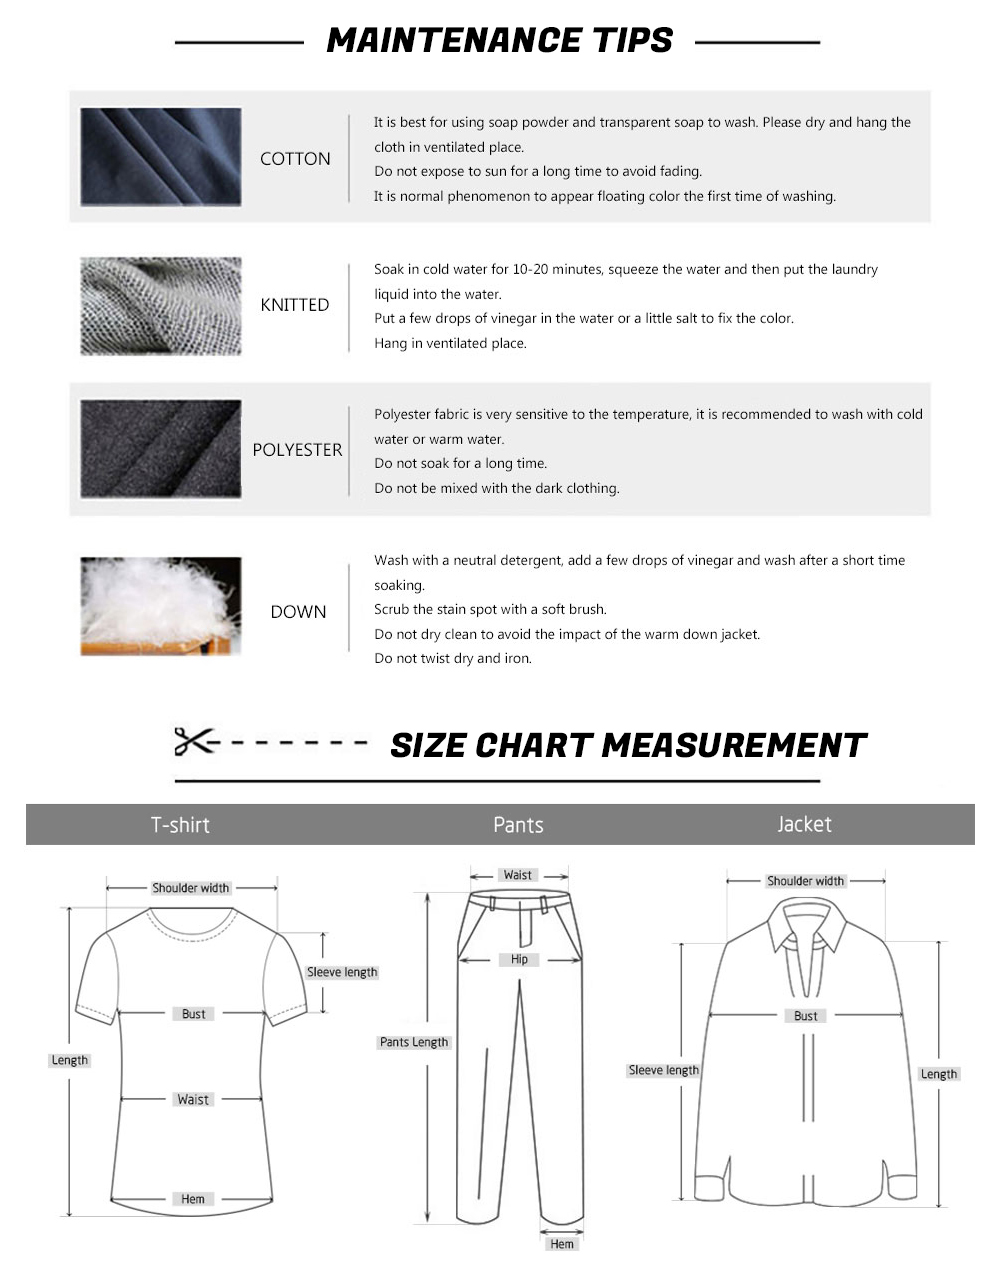 Long Sleeve Shirt Men 3D Printing Slim Fit Turn-down Collar Casual Male Clothing